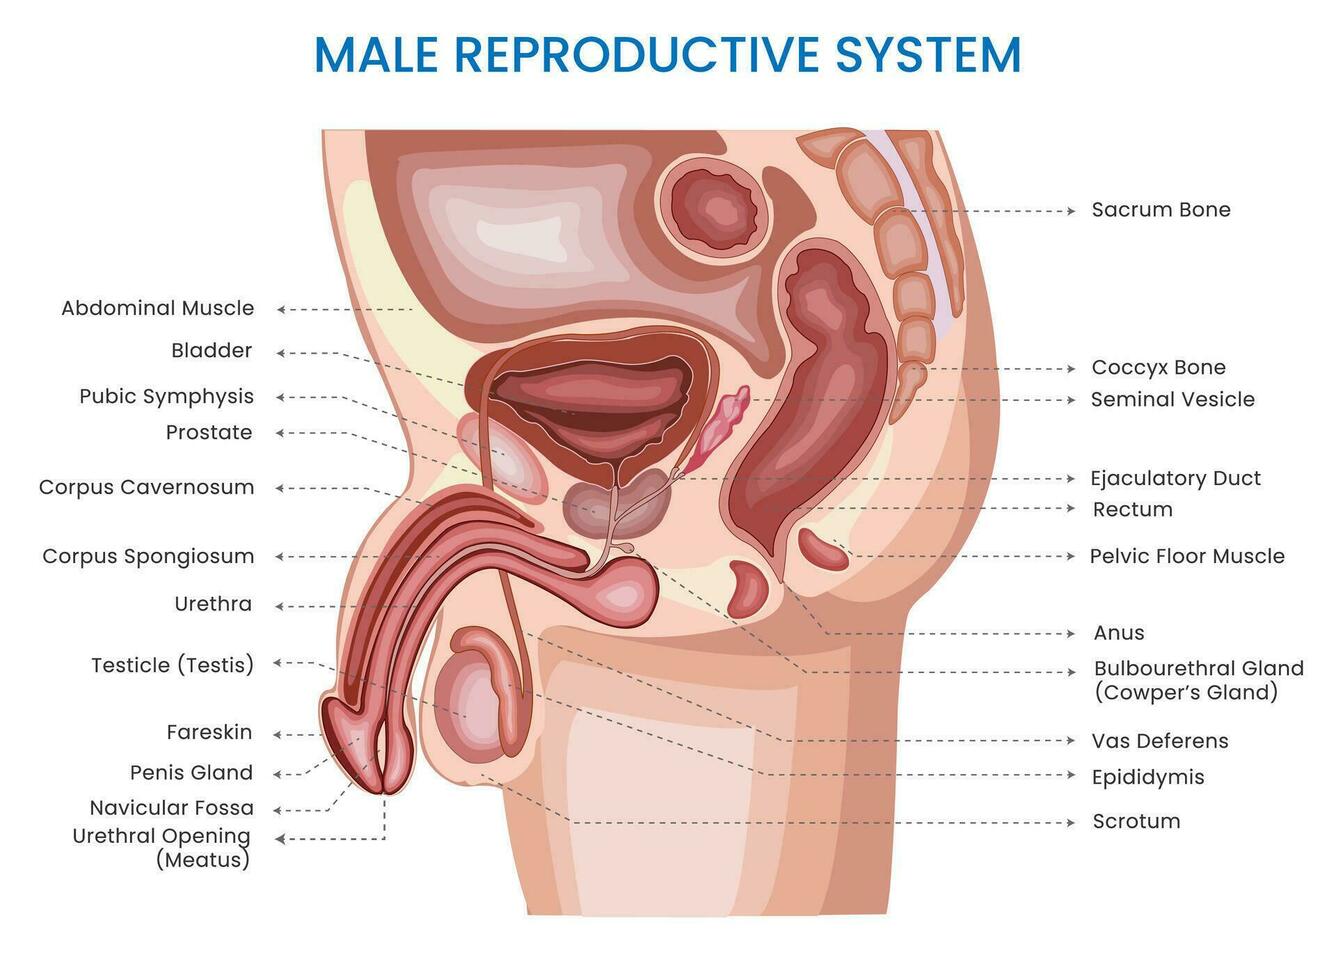 manlig reproduktiv systemet, testiklar, penis engagera i sperma produktion, transport, befruktning vektor